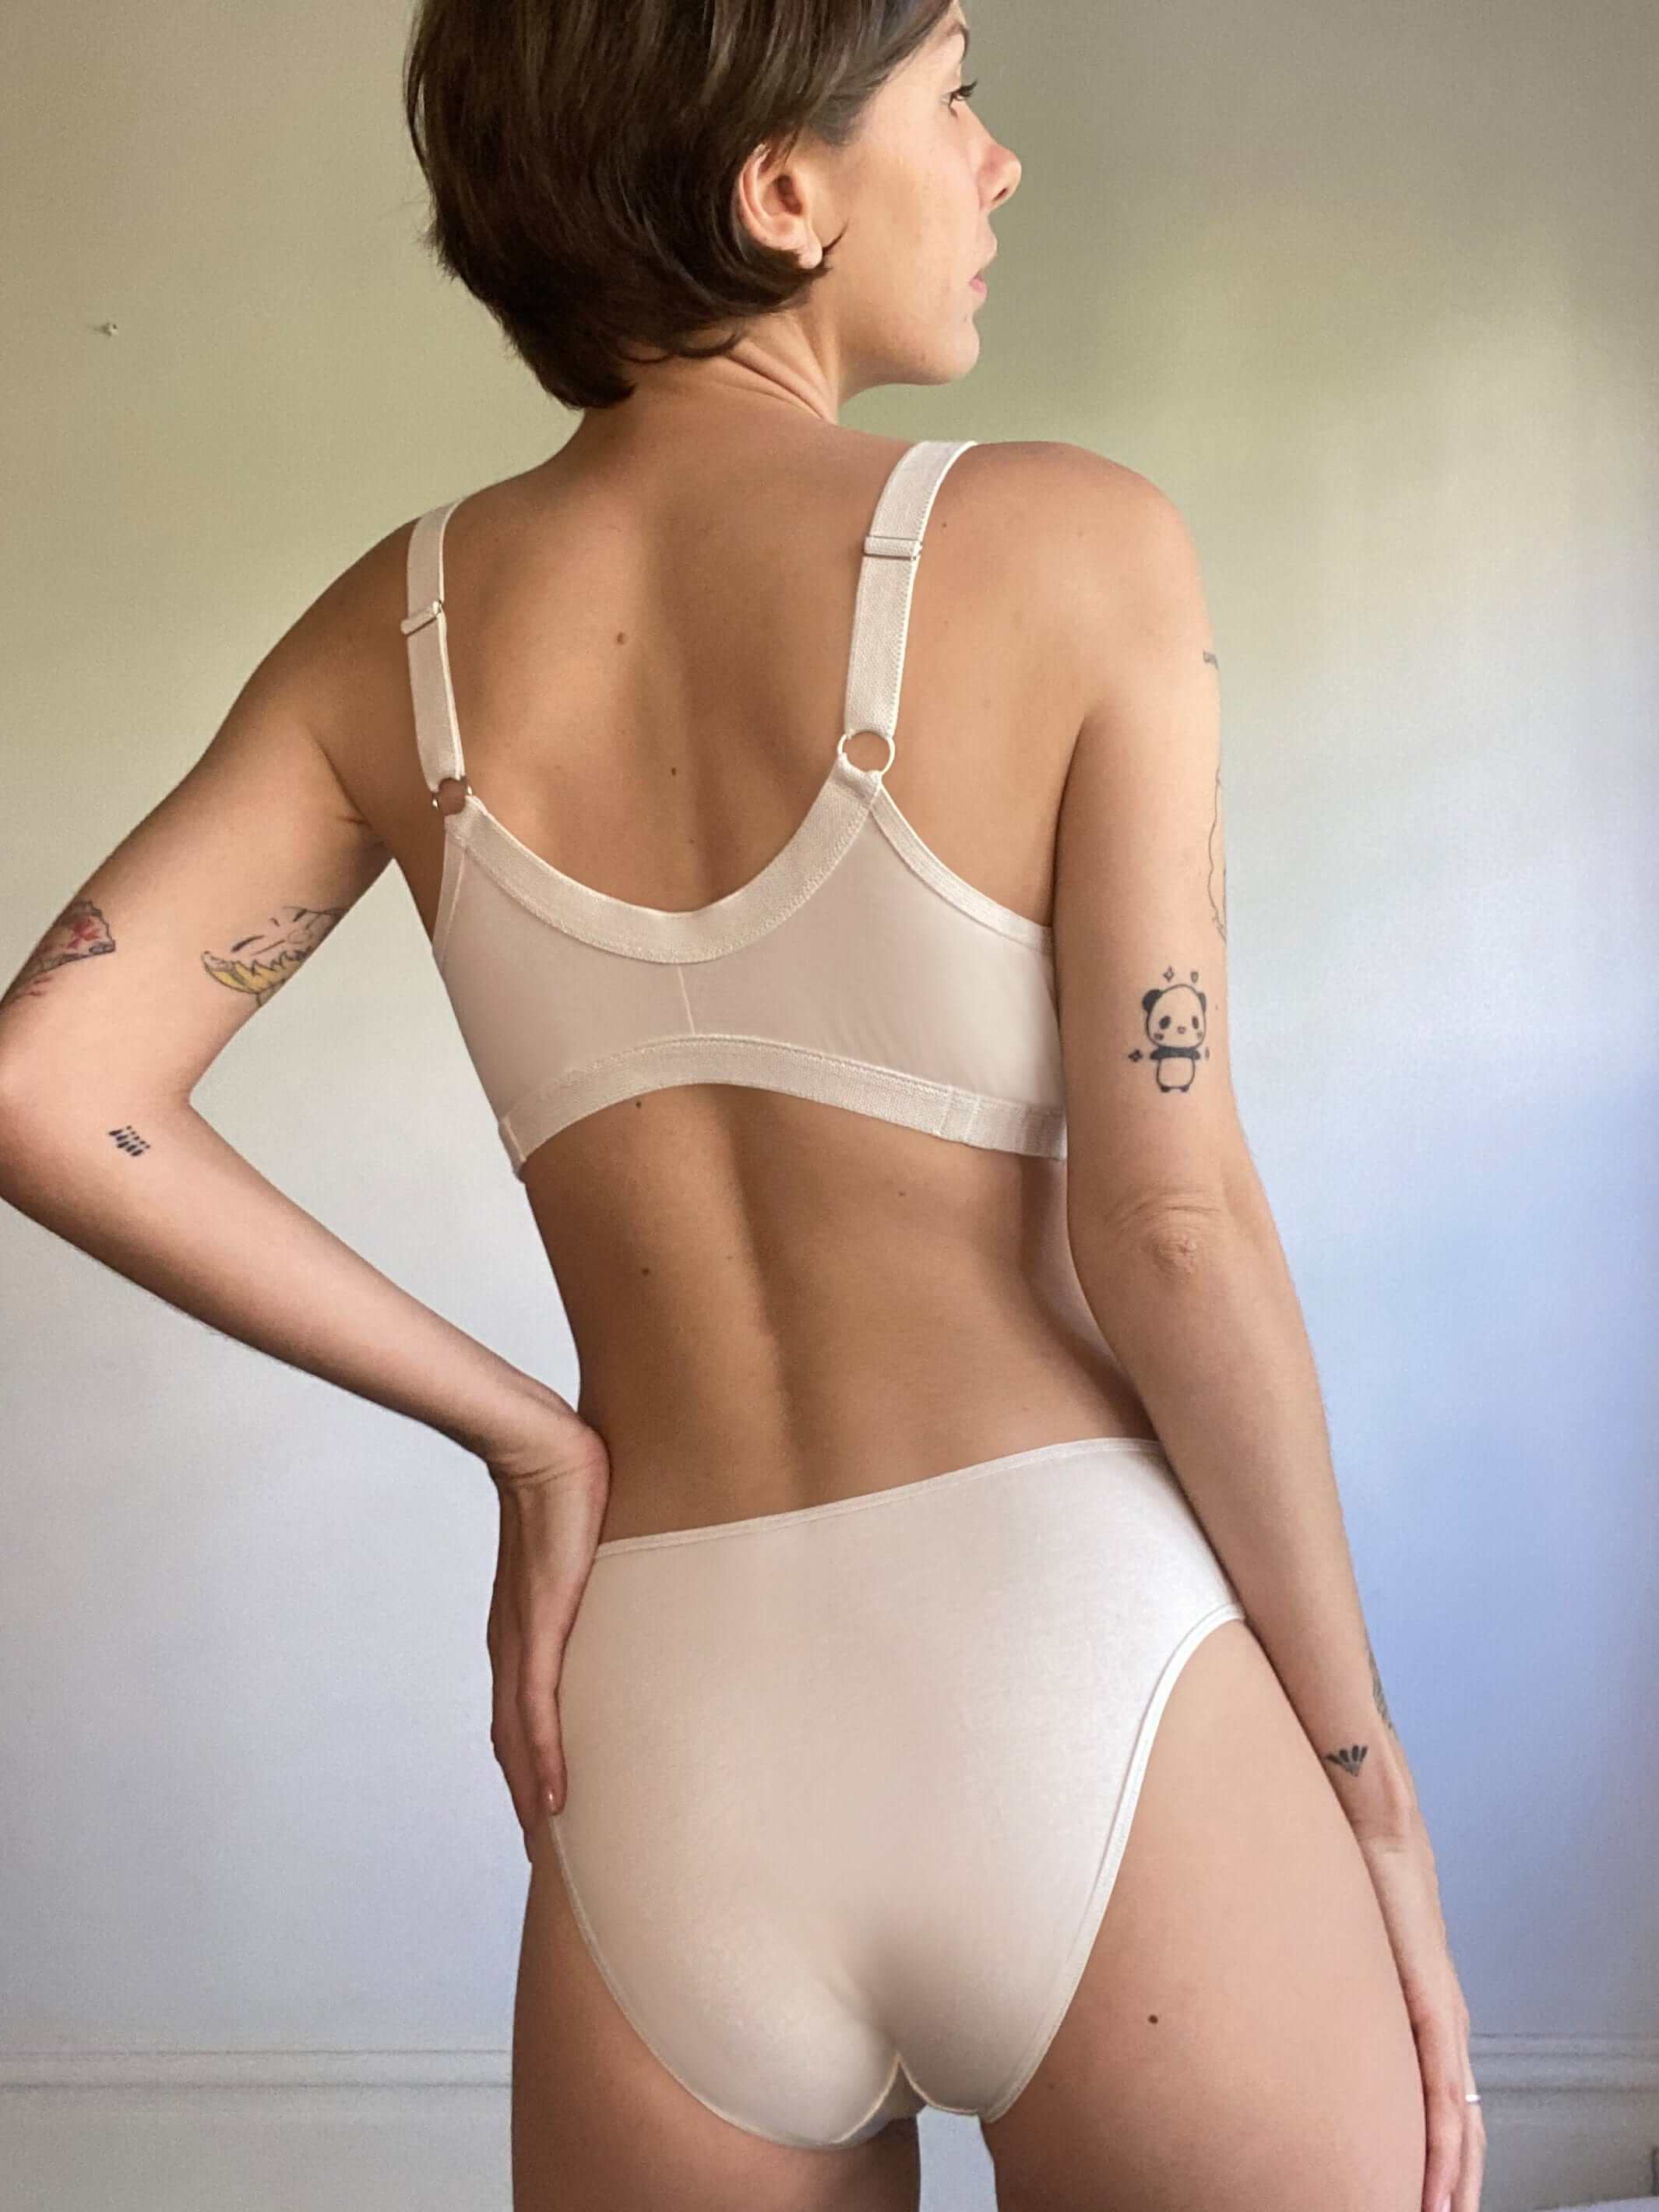 woman wearing an organic cotton nursing bra and matching organic cotton underwear